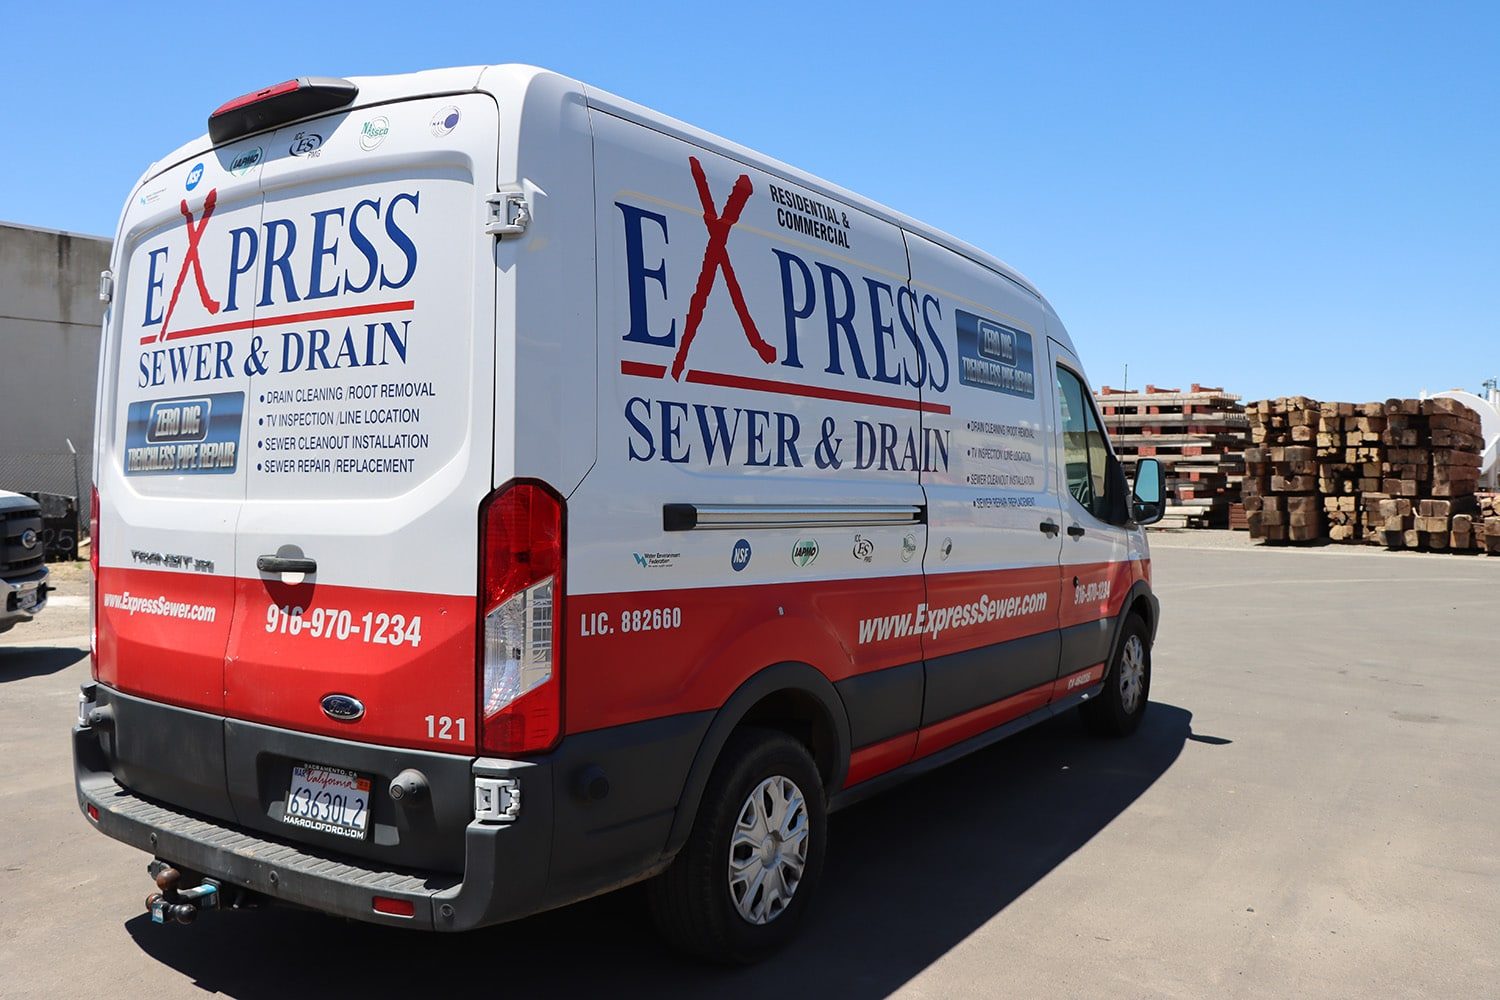 Express Sewer & Drain Van on their yard